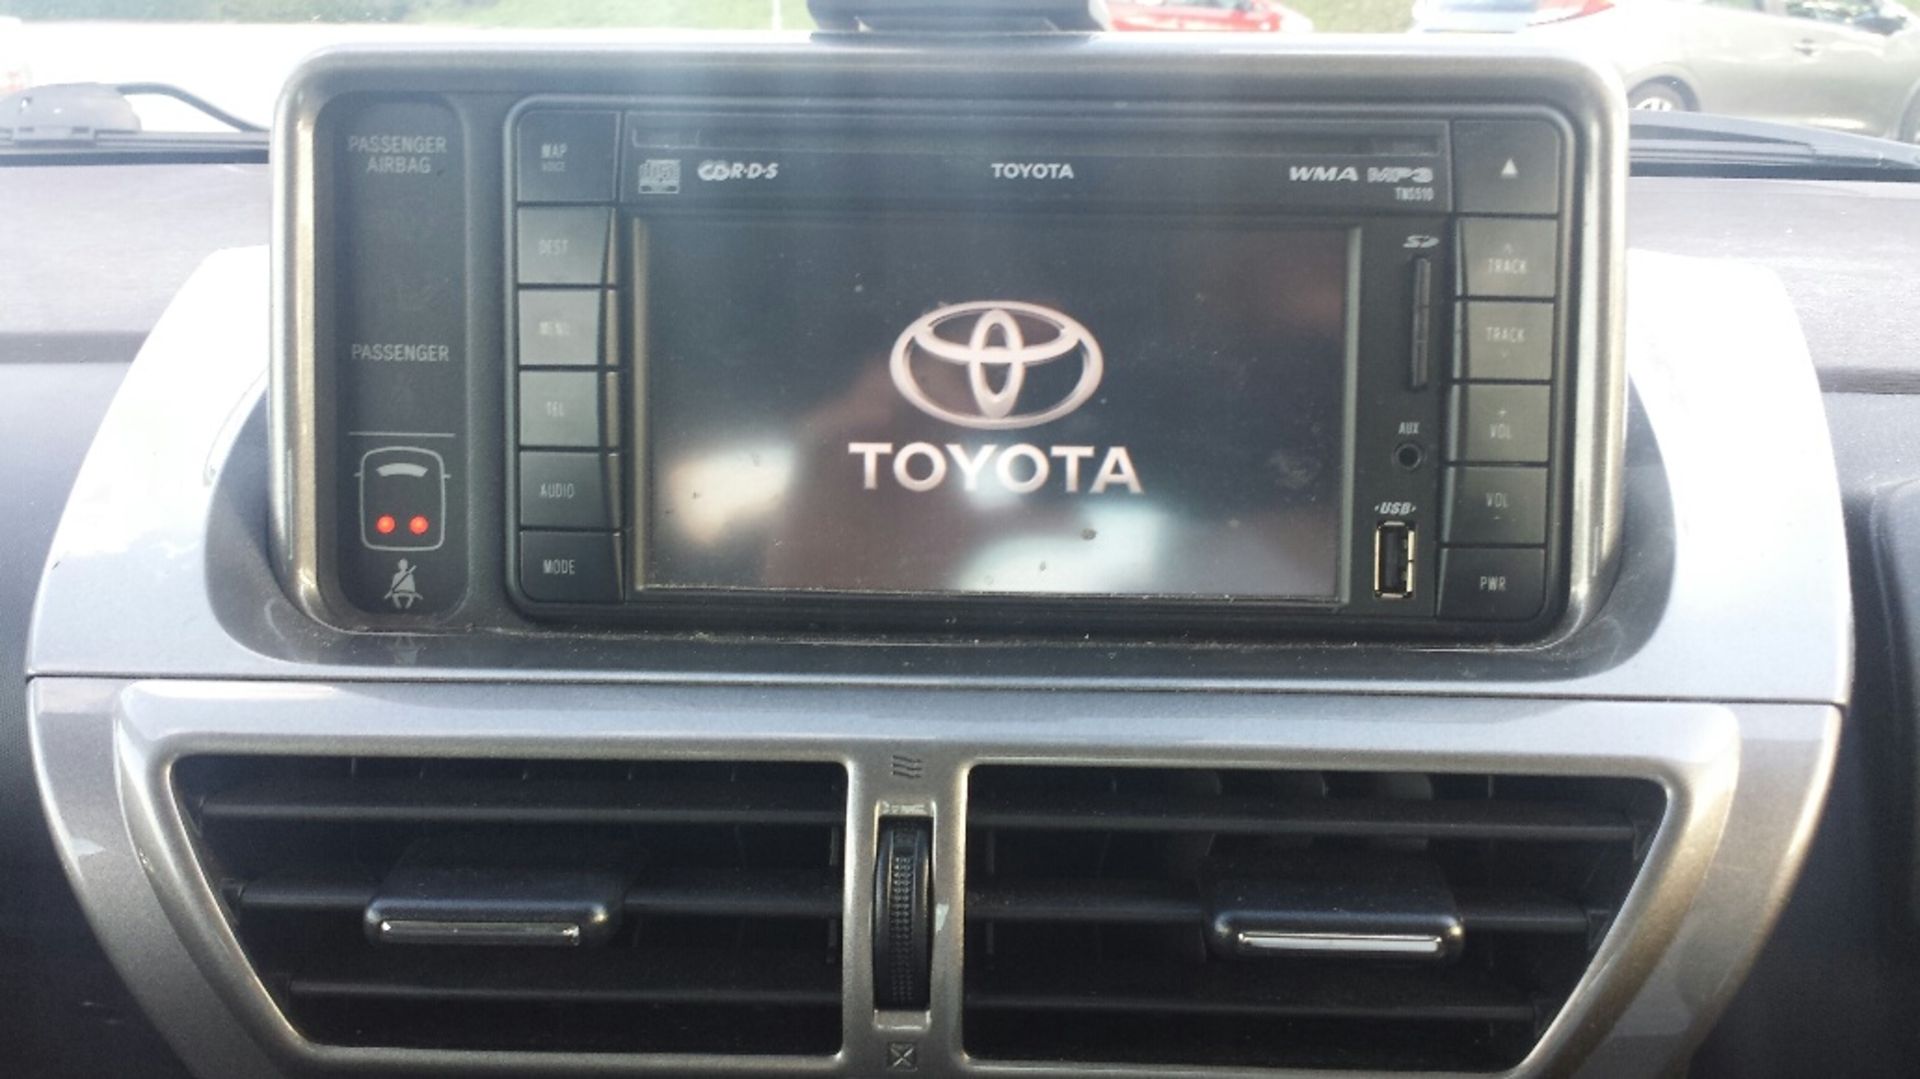 2009, Toyota IQ 1.3 - Image 5 of 7